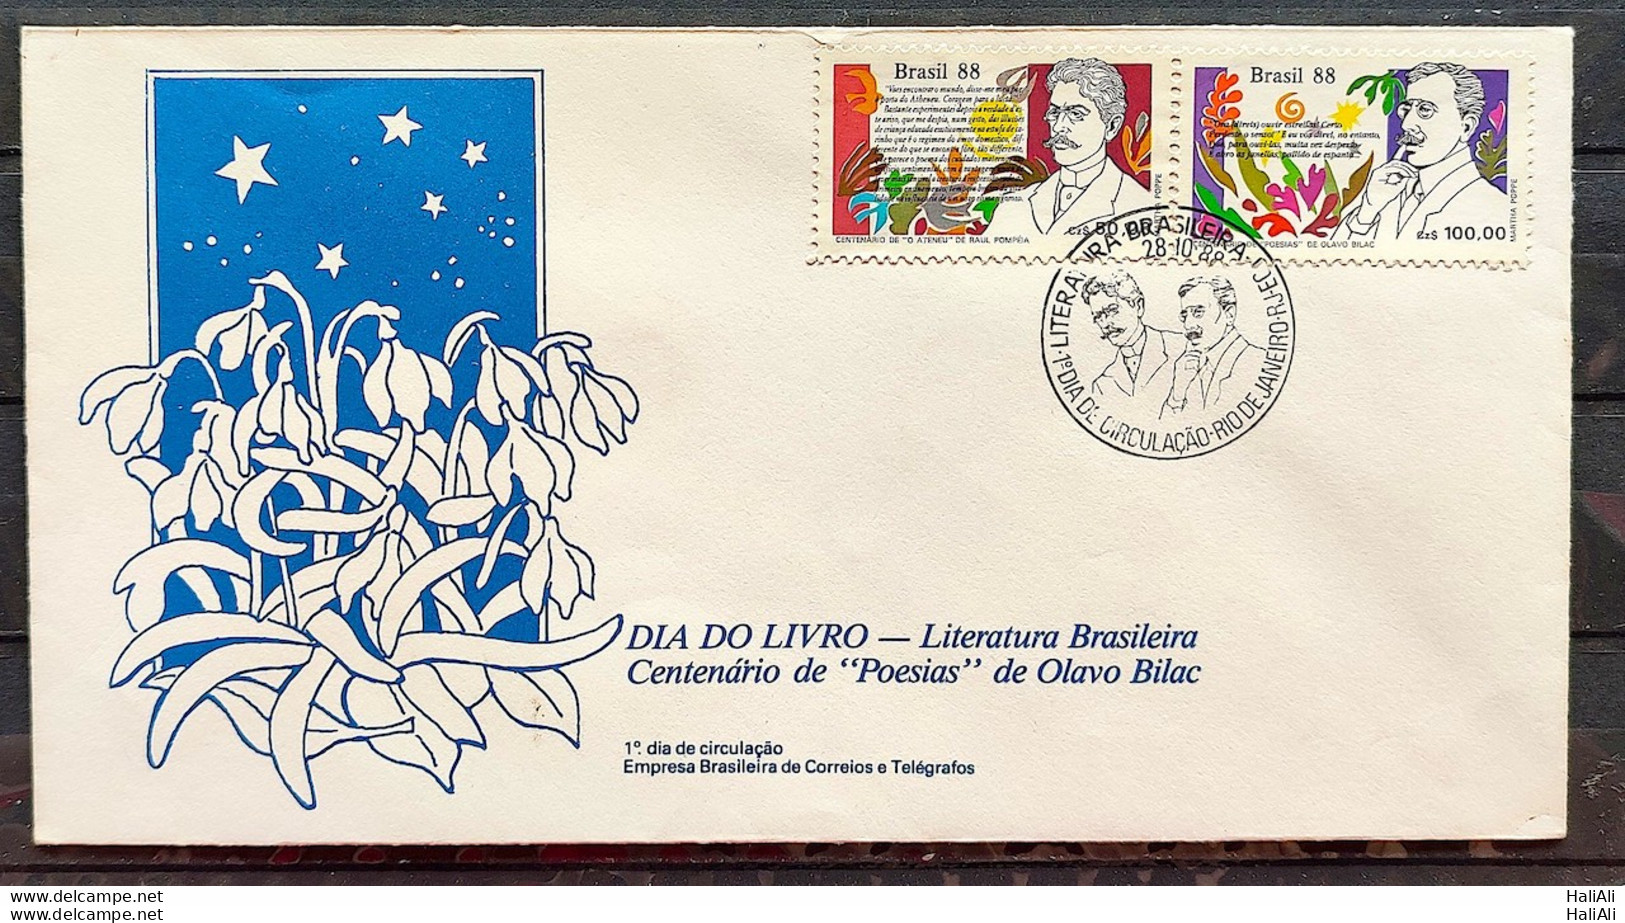 Brazil Envelope FDC 454 1988 Literature Raul Pompeia Olavo Bilac CBC RJ - FDC